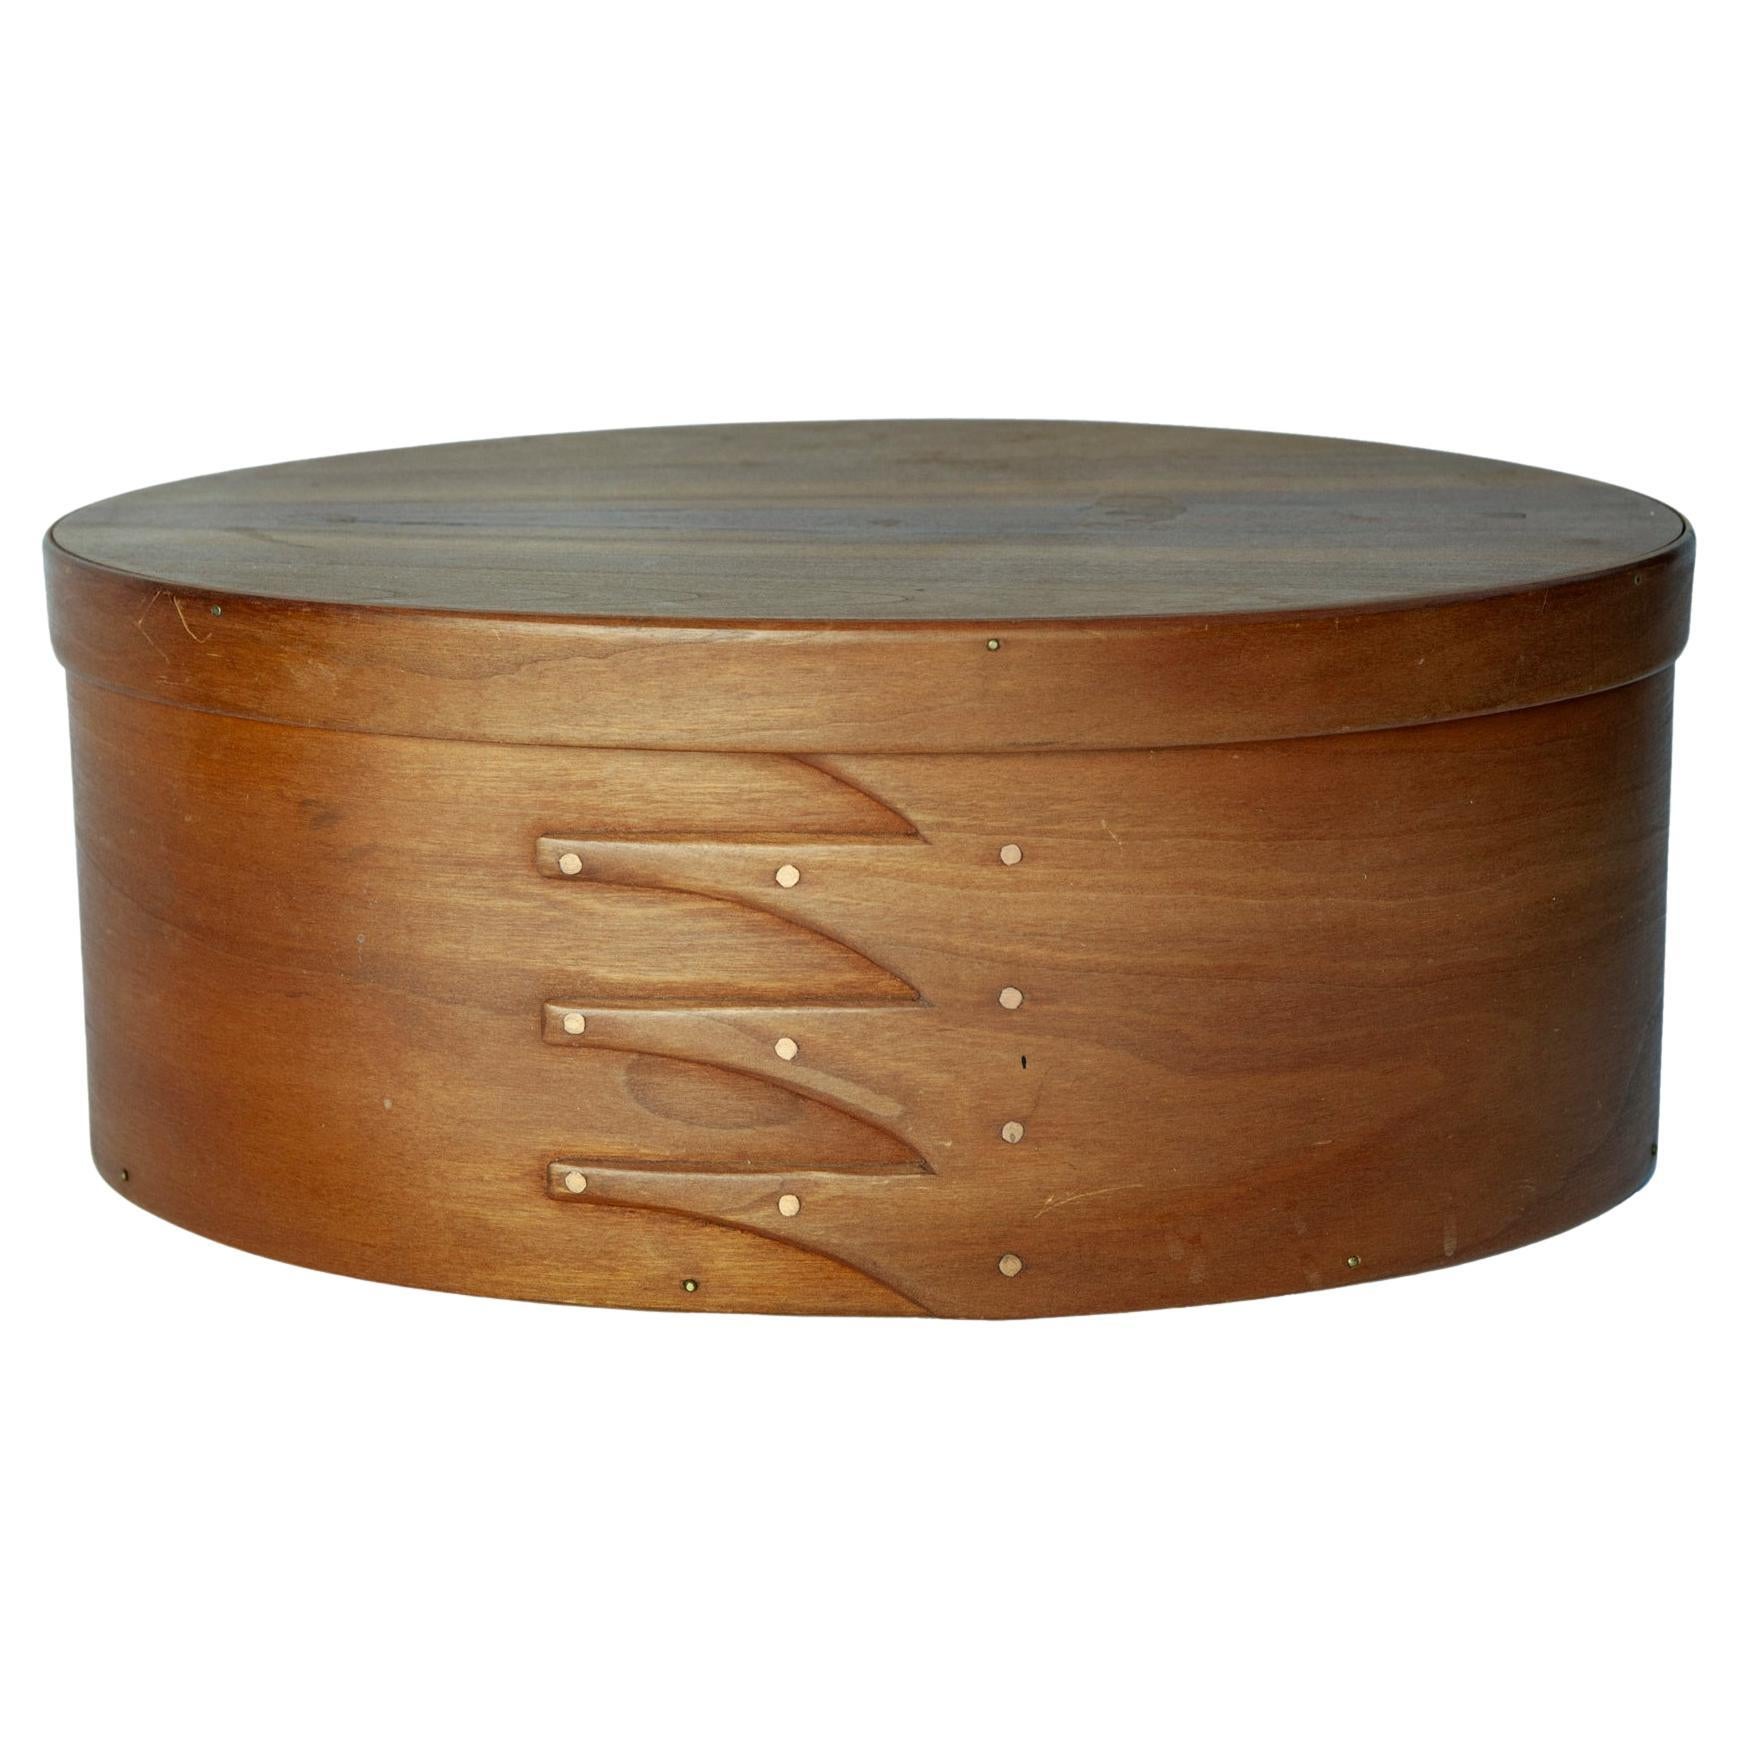 Handmade Artisan Oval Cherry Wood Box